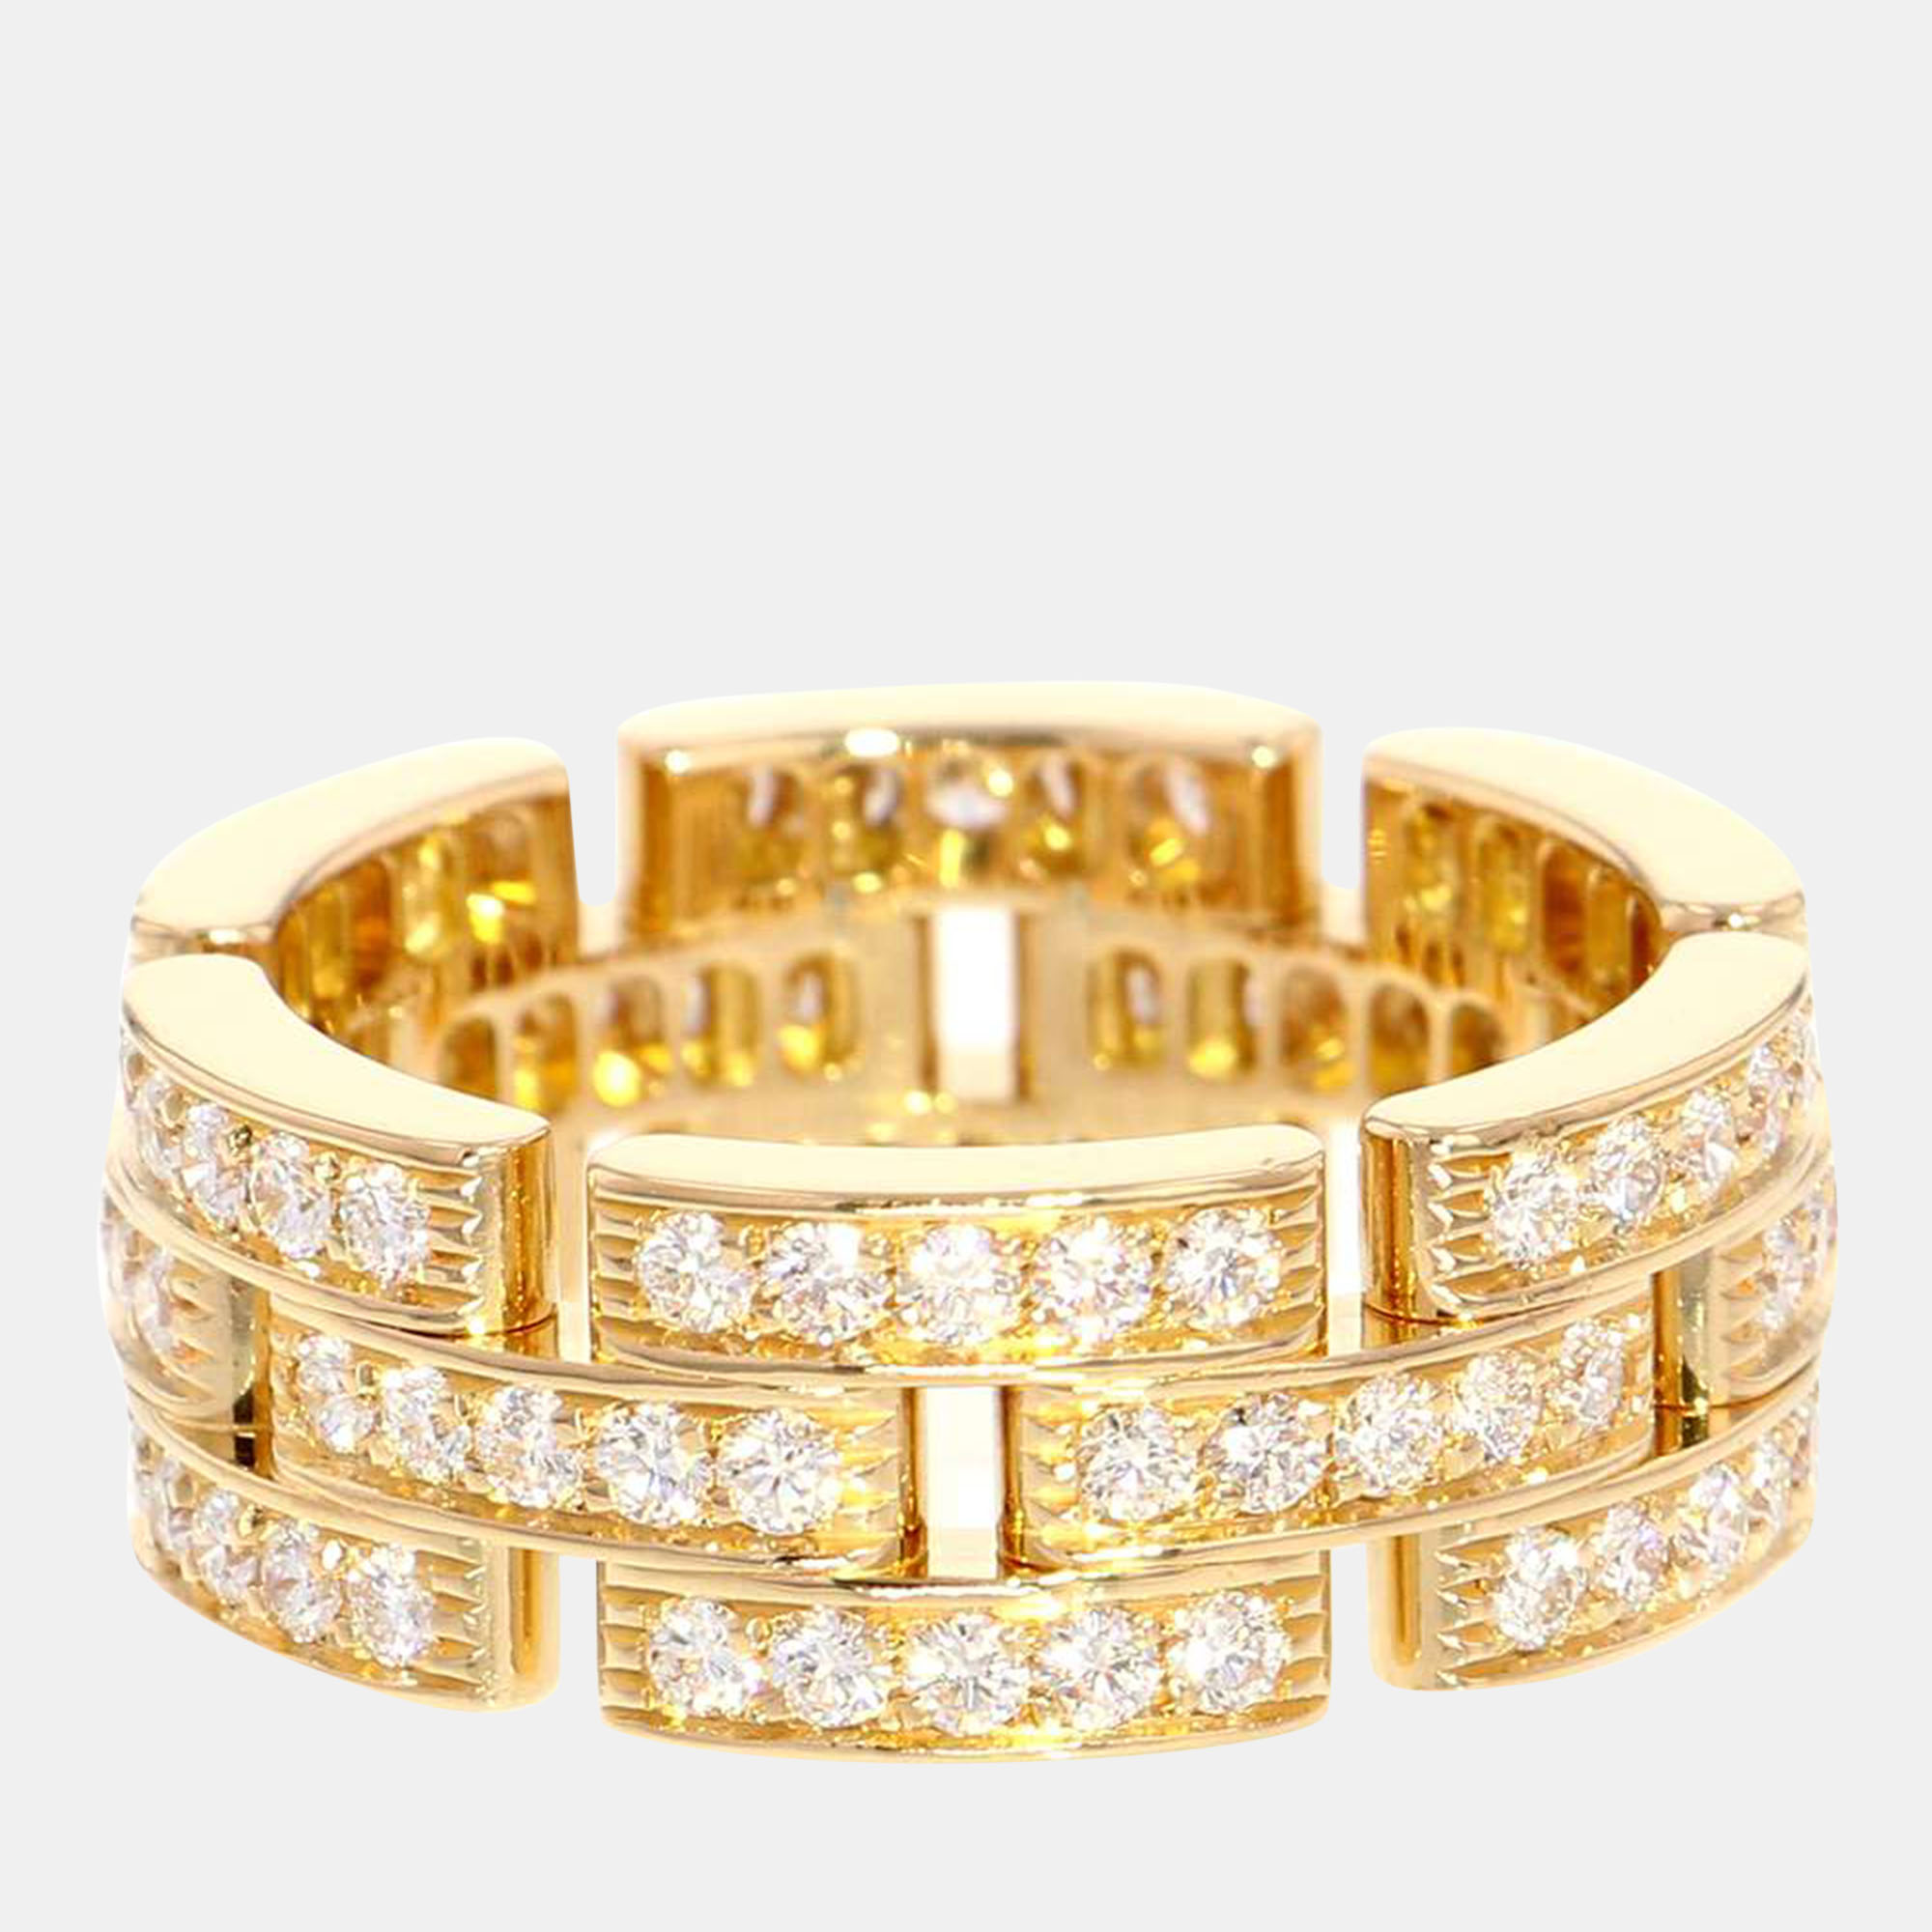 Cartier Maillon Panthere 18K Yellow Gold Diamond Ring EU 58